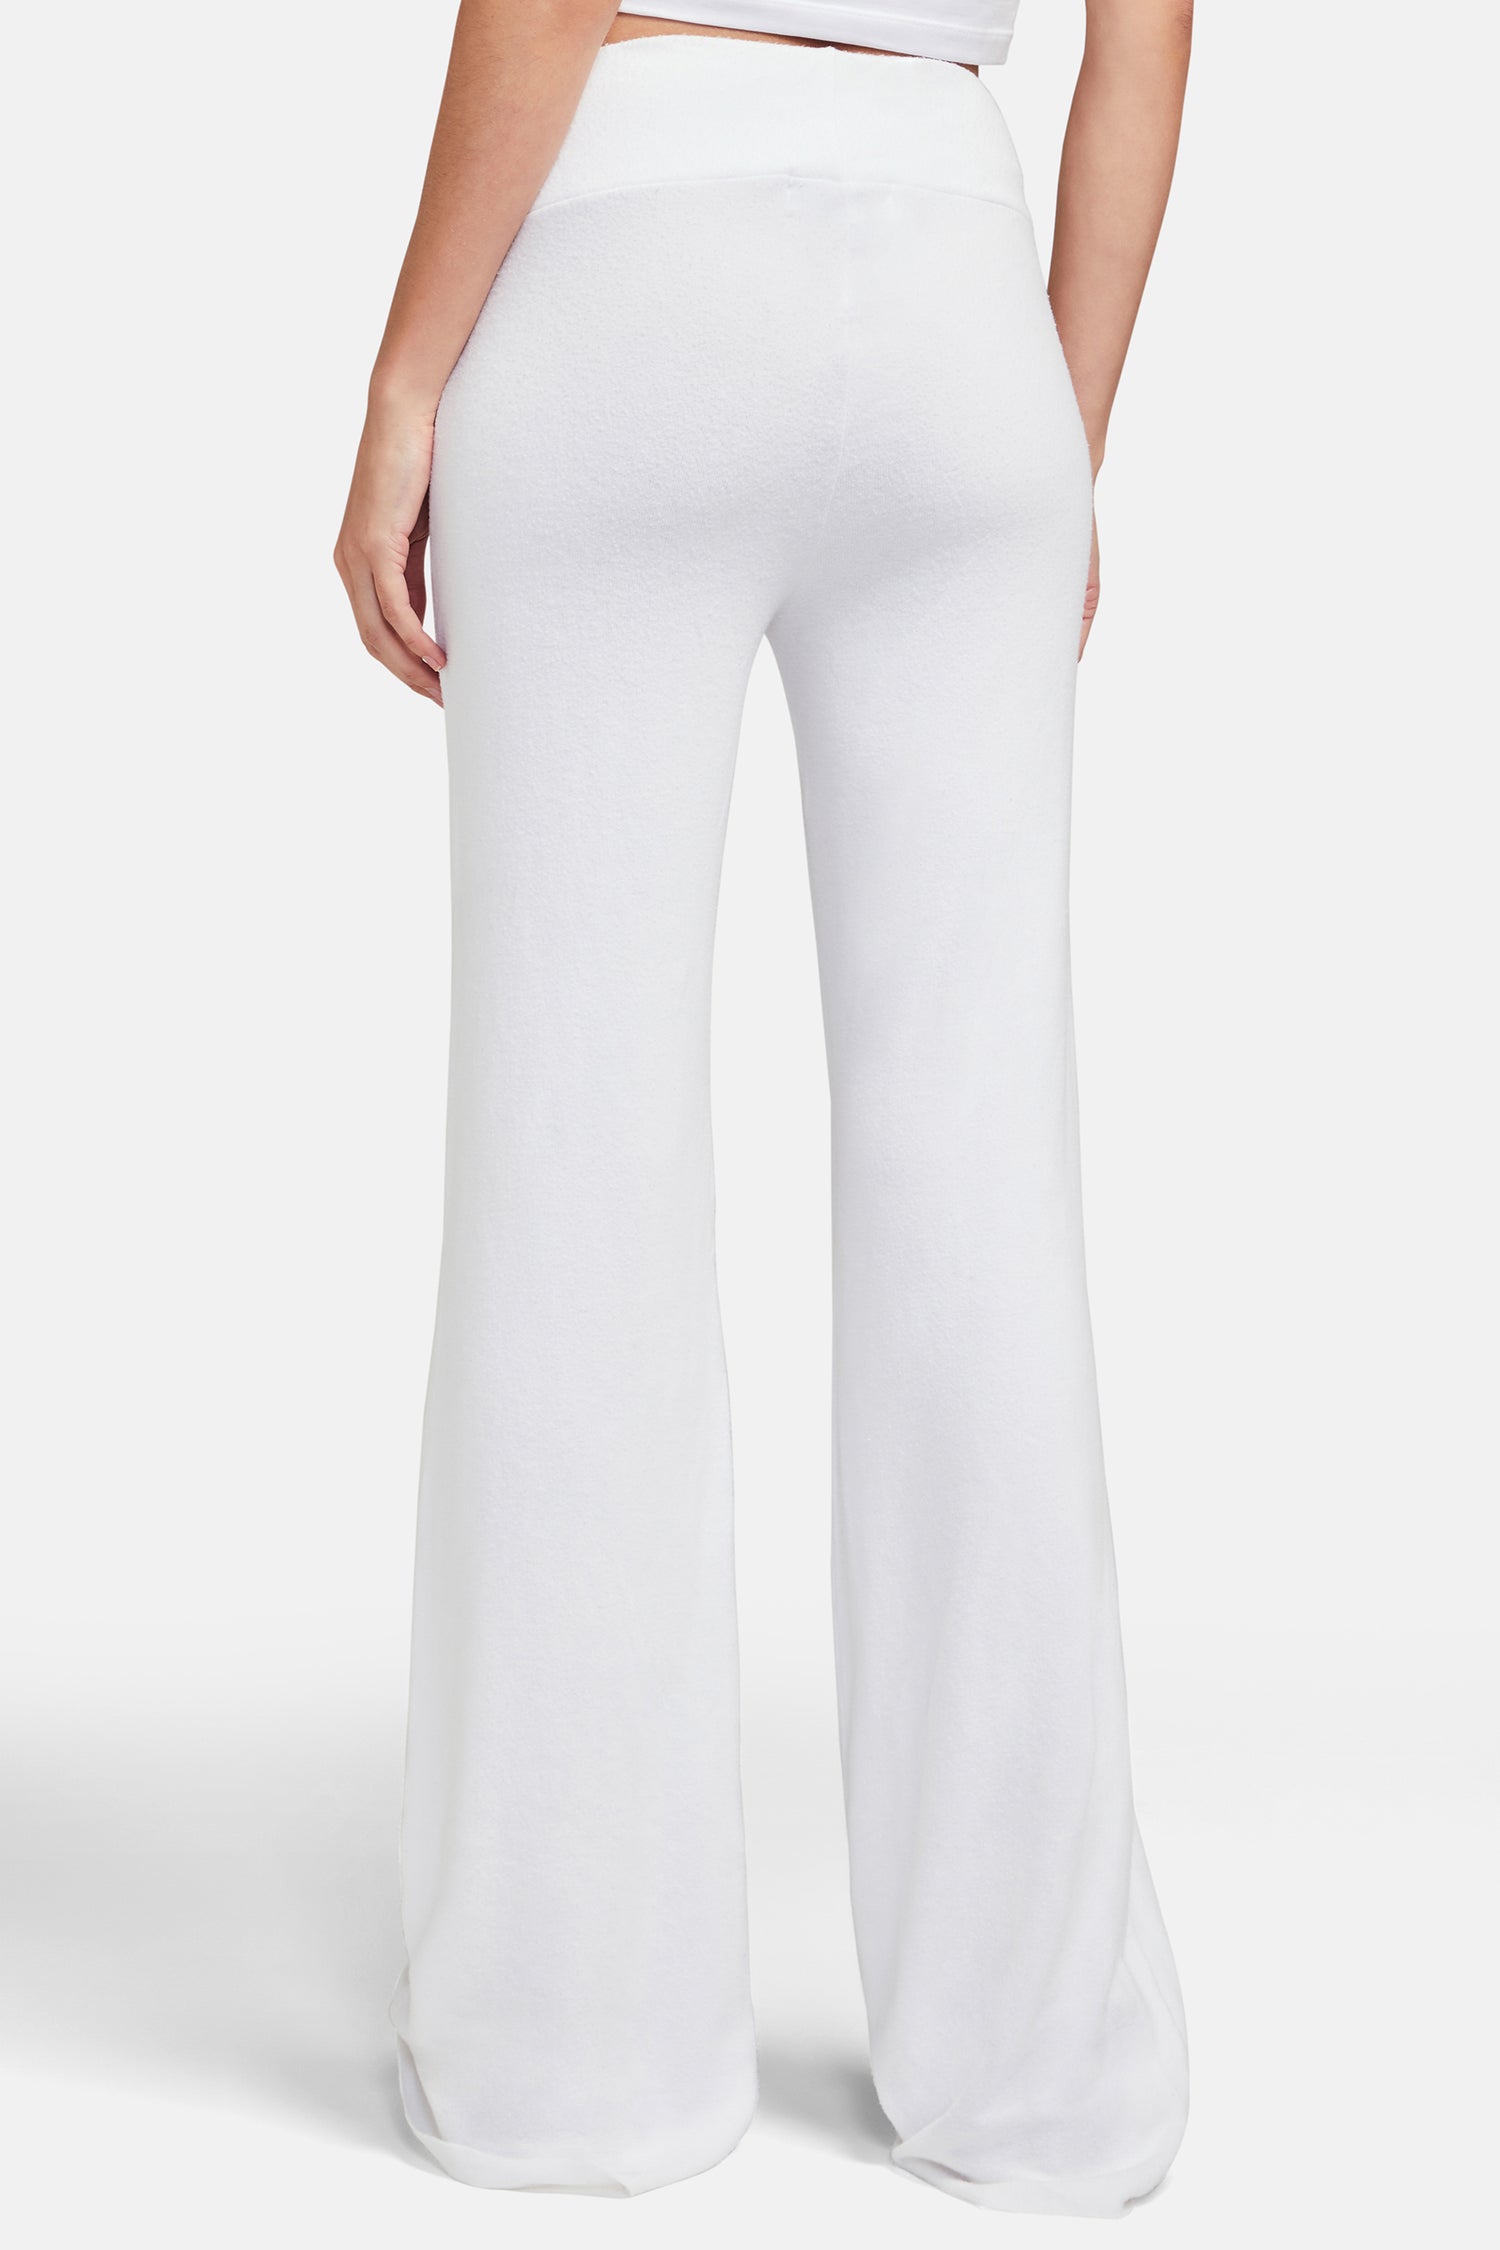 White Lounge Pants – Crystal Archie Shop